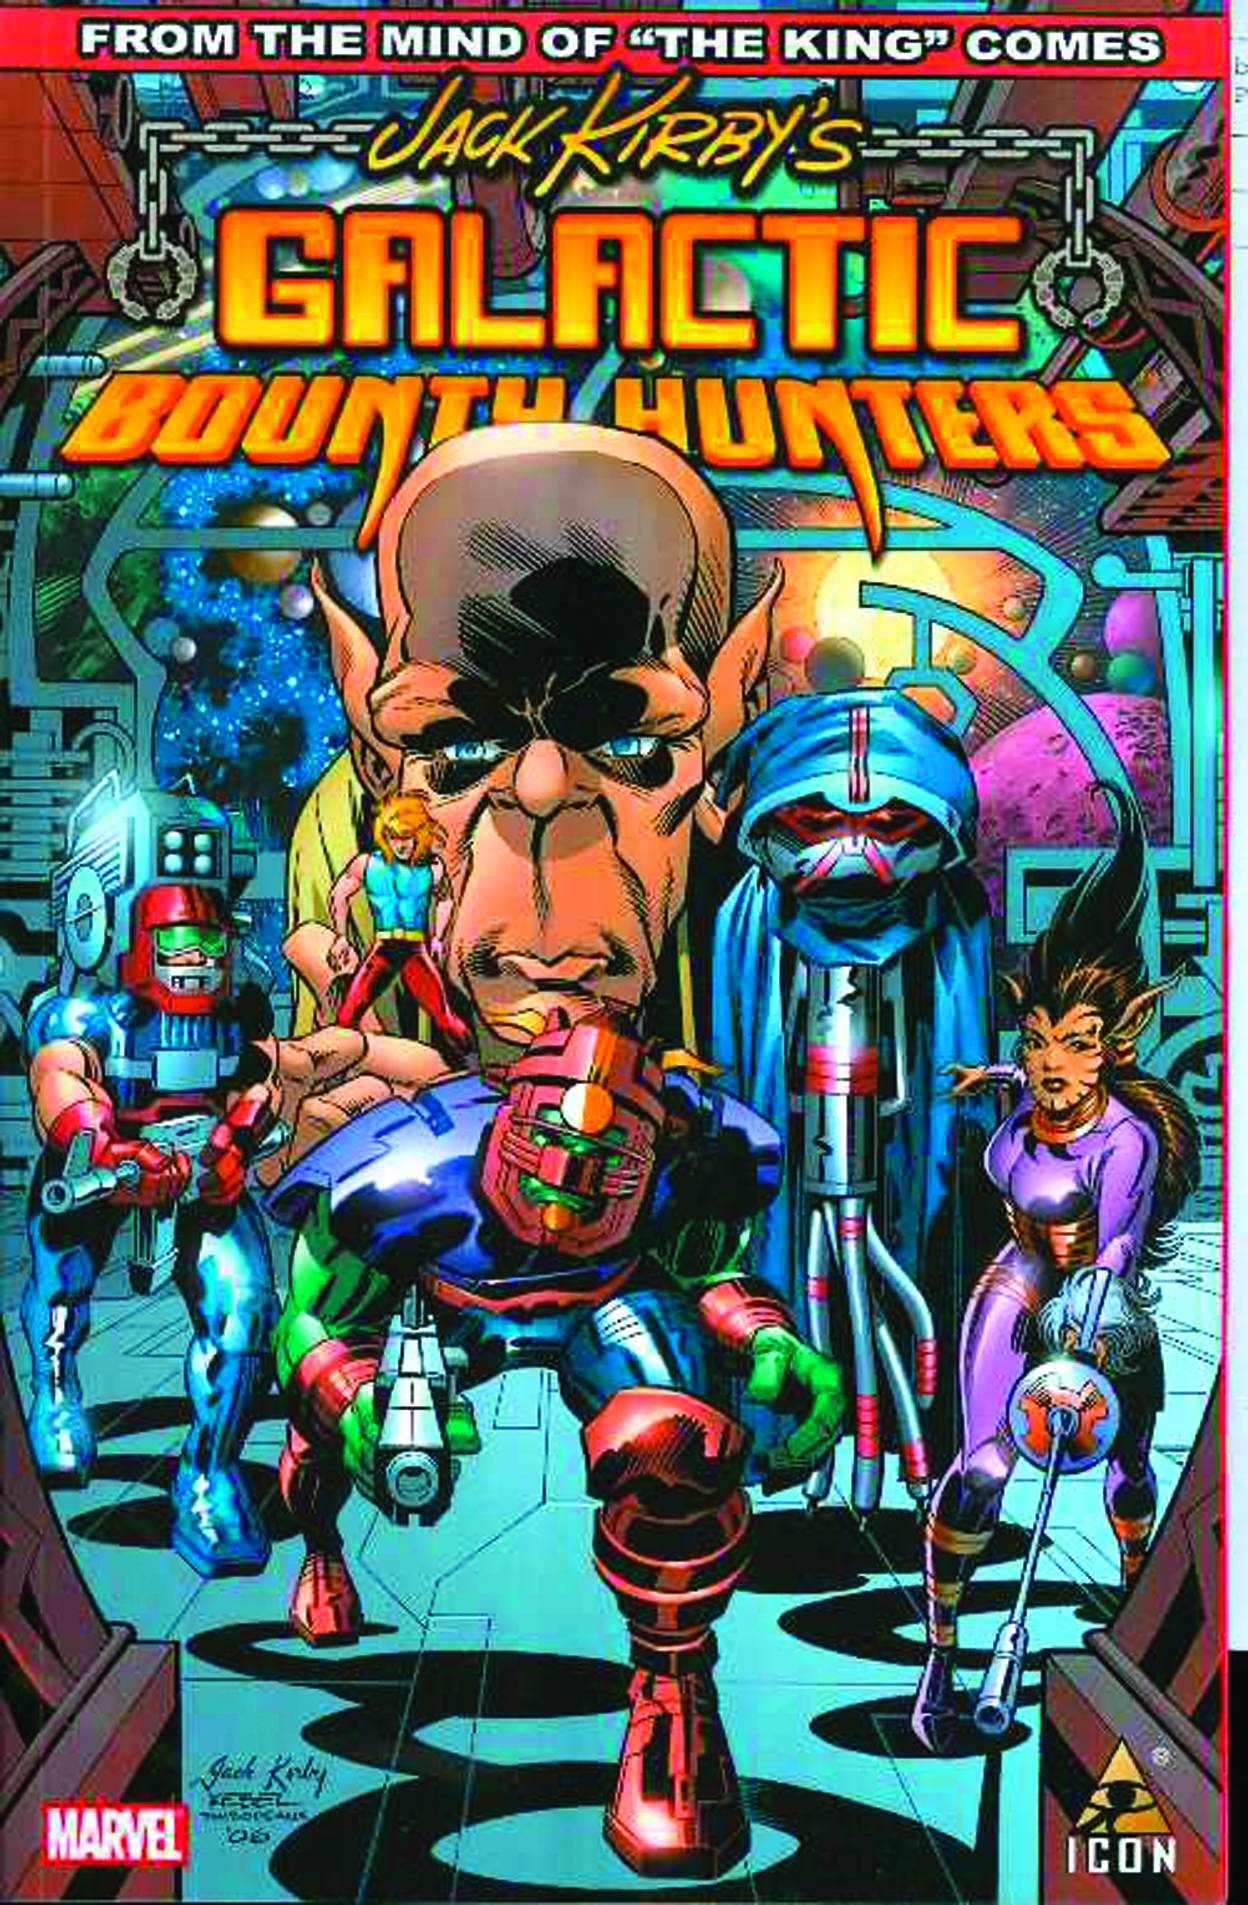 Jack Kirbys Galactic Bounty Hunters Graphic Novel